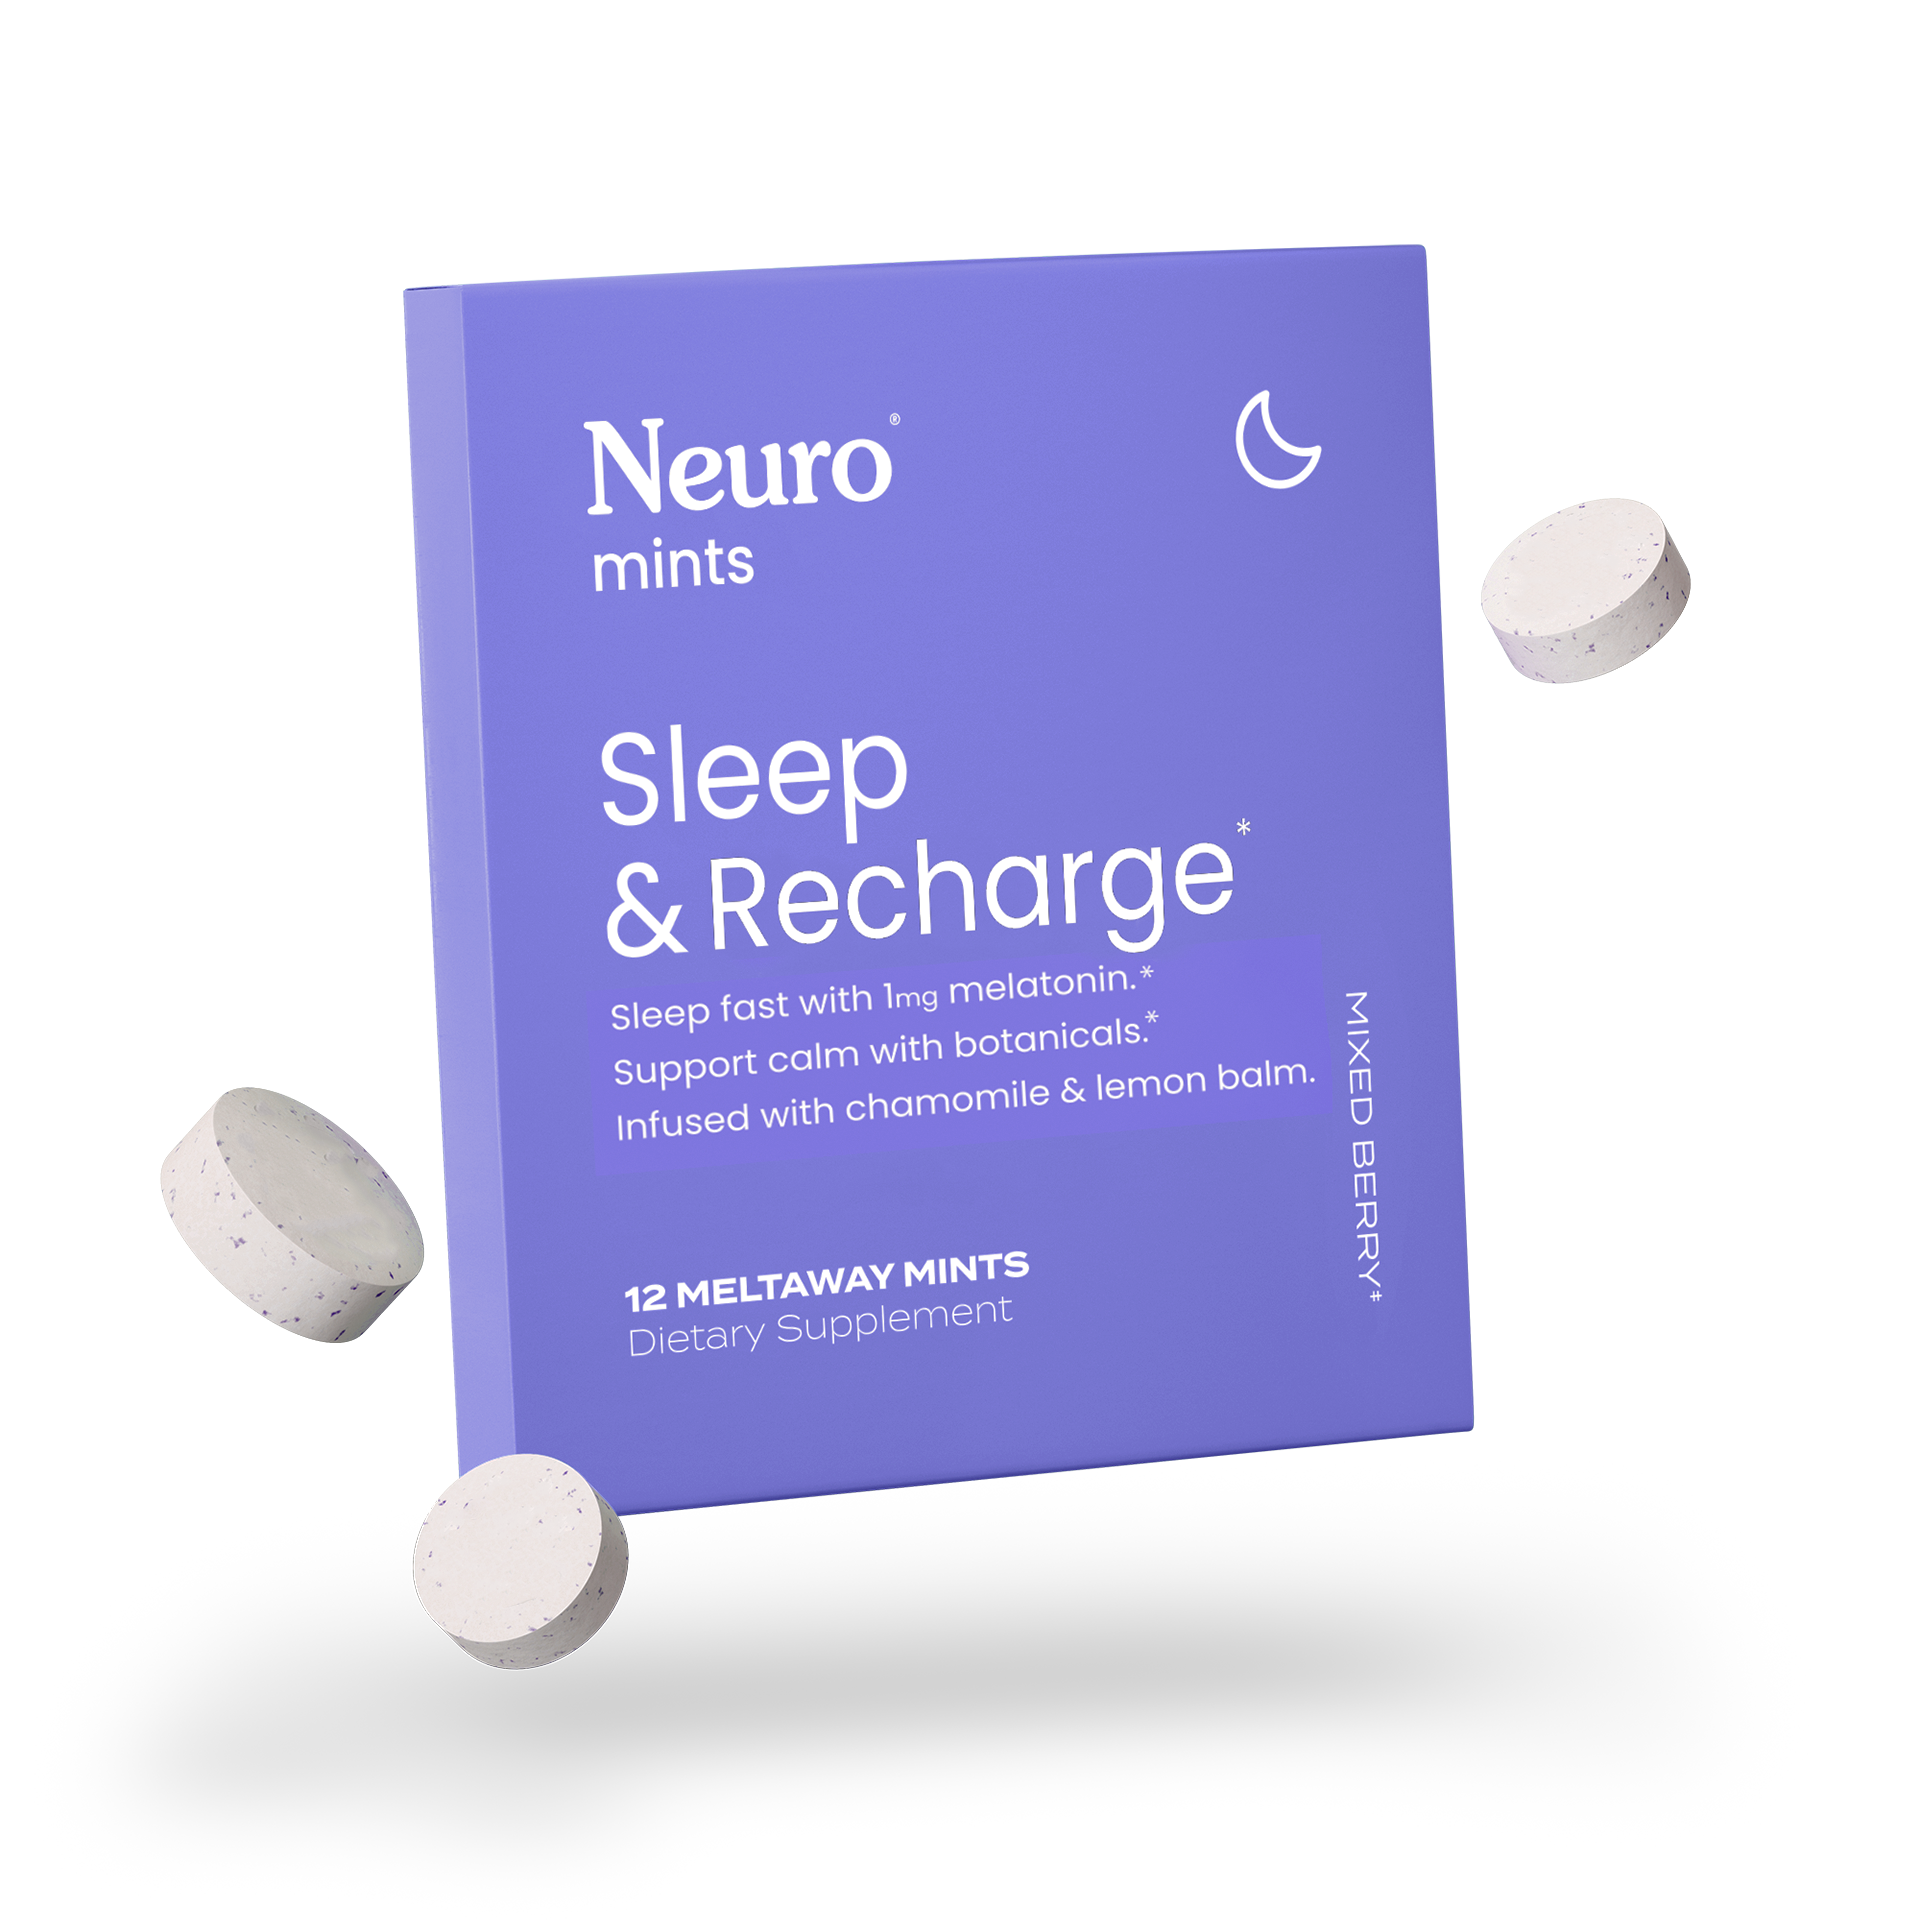 Sleep & Recharge Meltaway Mints